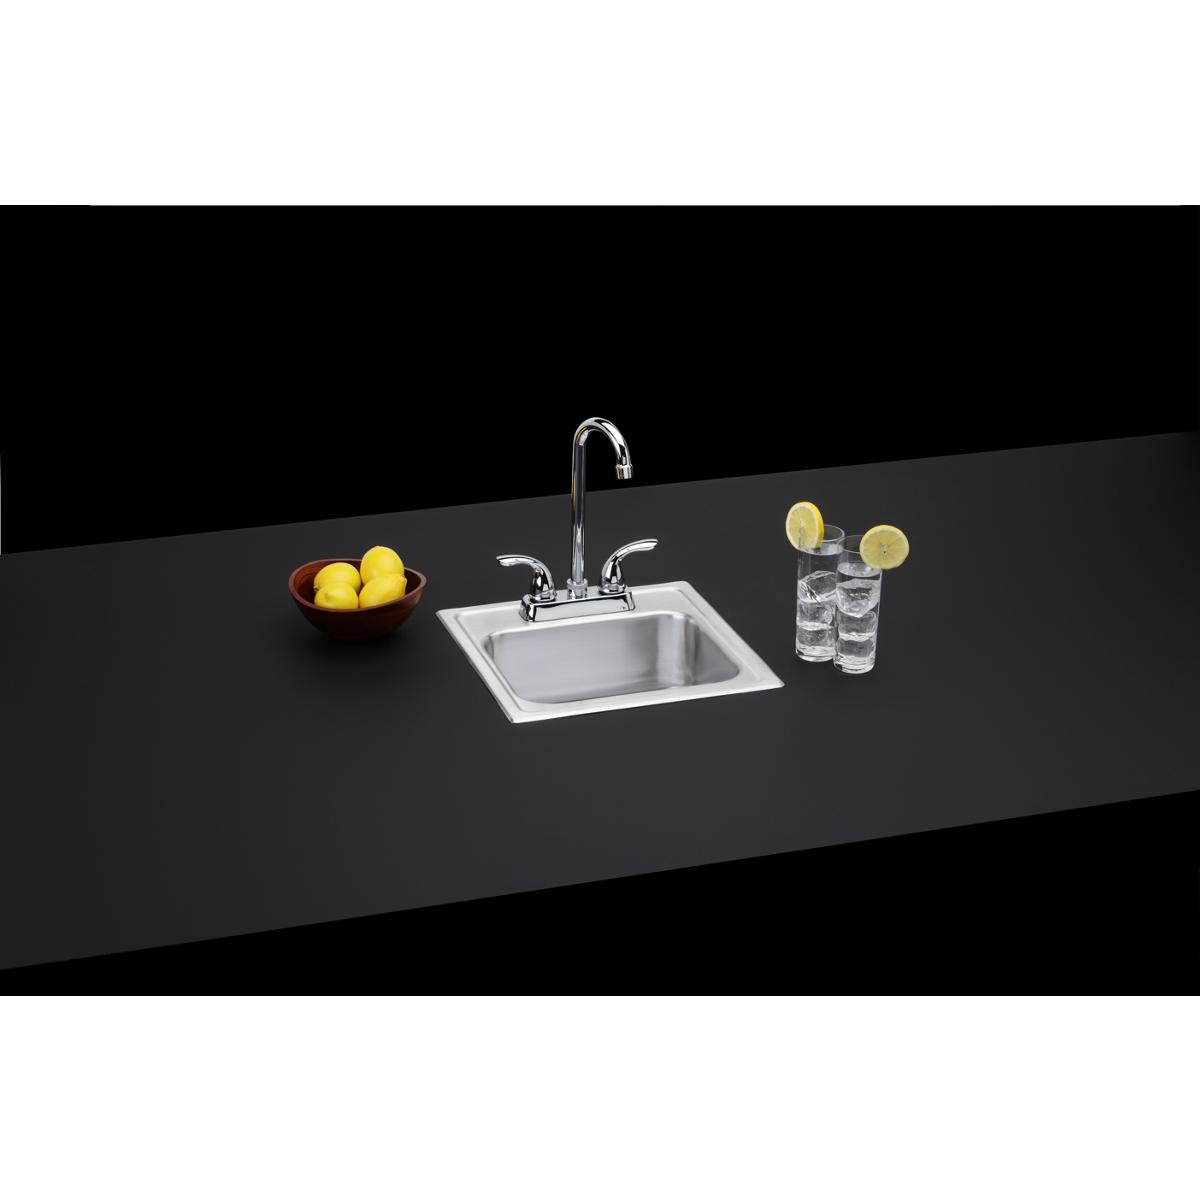 Elkay Dayton Stainless Steel 15" x 15" x 6" Single Bowl Drop-in Bar Sink and Faucet Kit